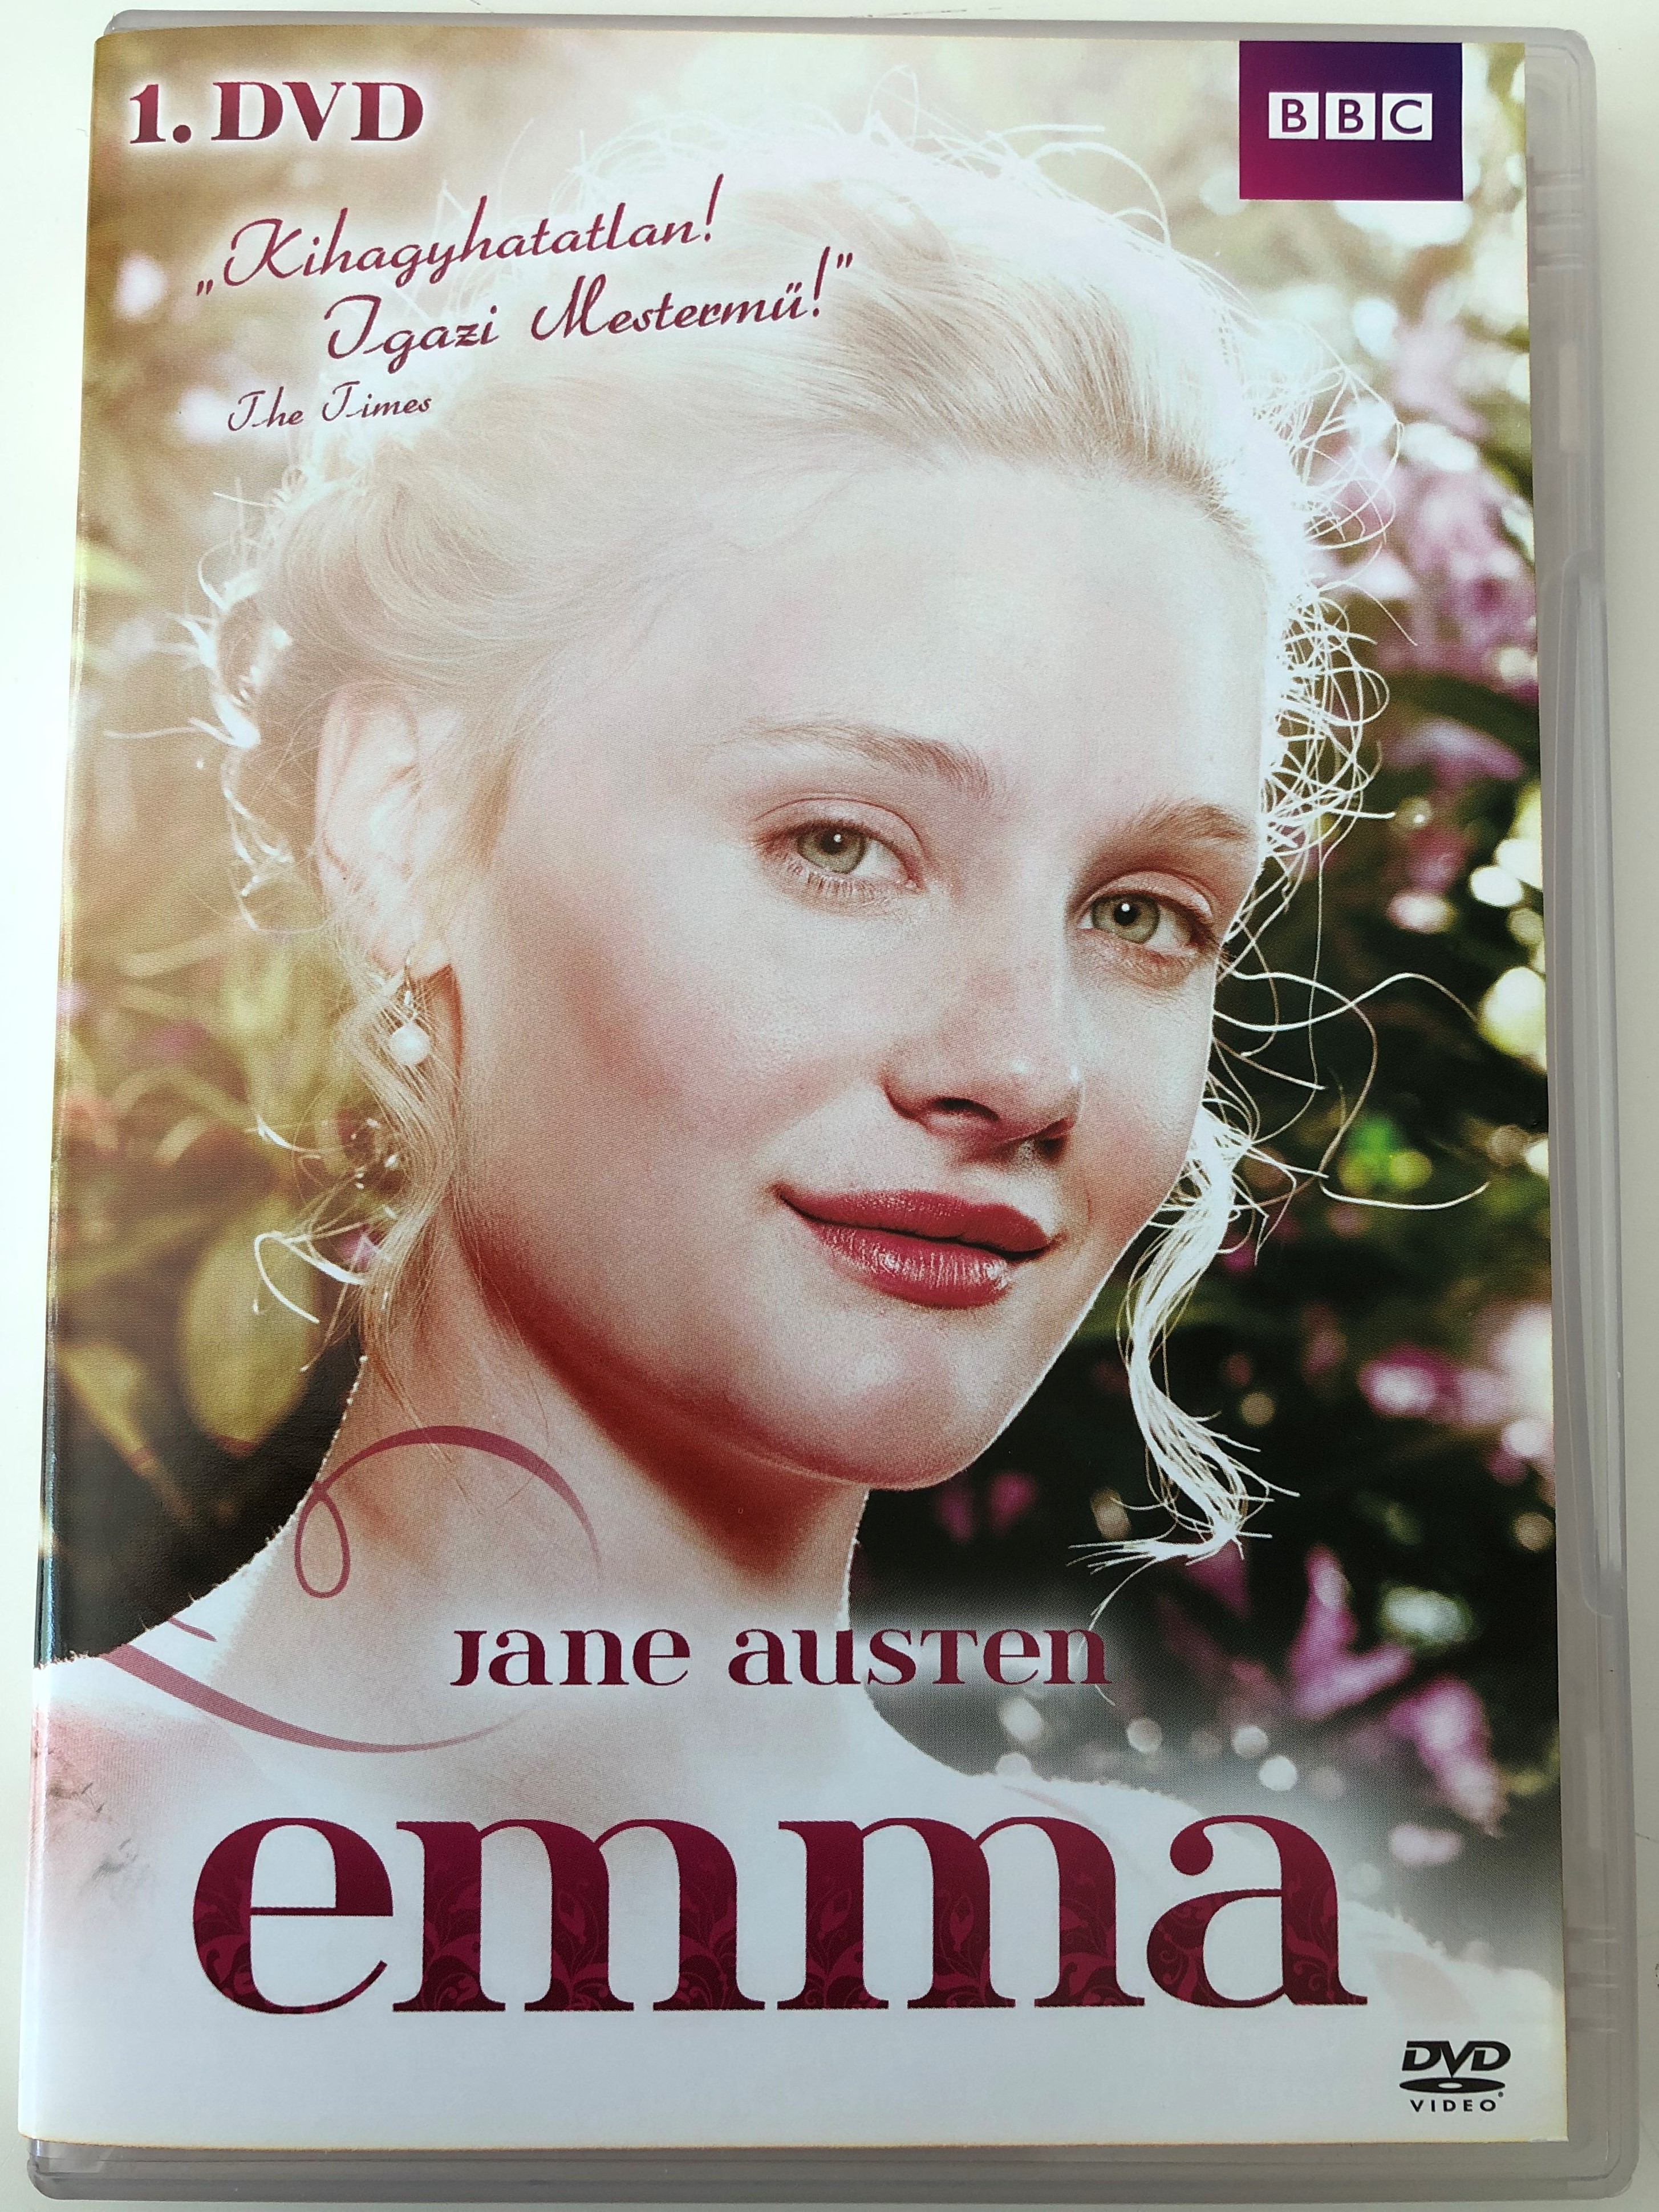 Jane Austen's Emma DVD Part 1. / BBC mini-series / Directed by Jim O'Hanlon  / Starring: Romola Garai, Jonny Lee Miller, Michael Gambon, Tamsin Greig -  bibleinmylanguage